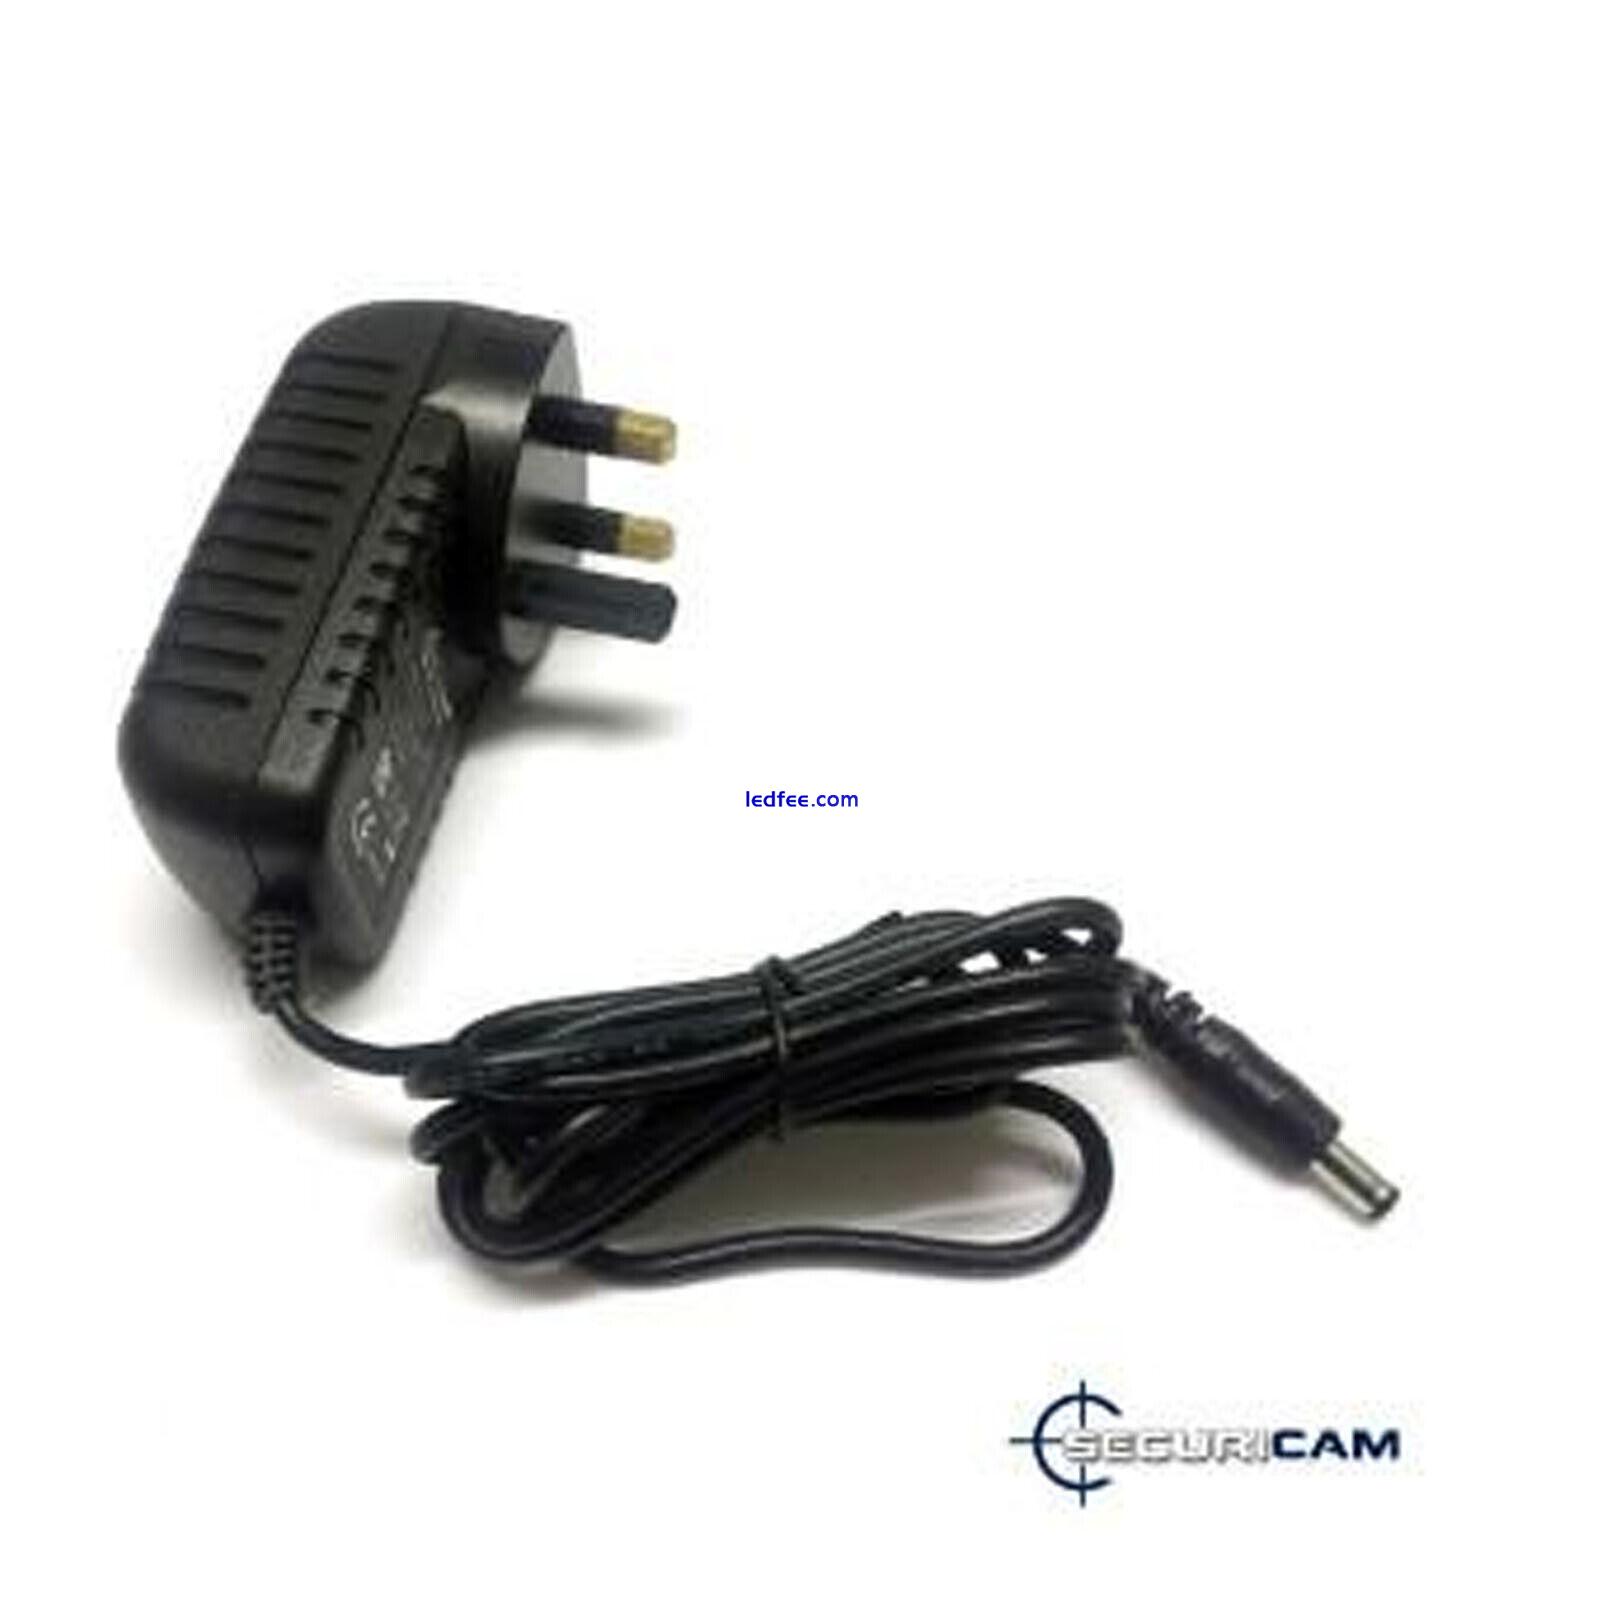 12V 1A DC UK Plug Power Supply Adaptor Transformer for LED Strips, CCTV TV. 12W 5 